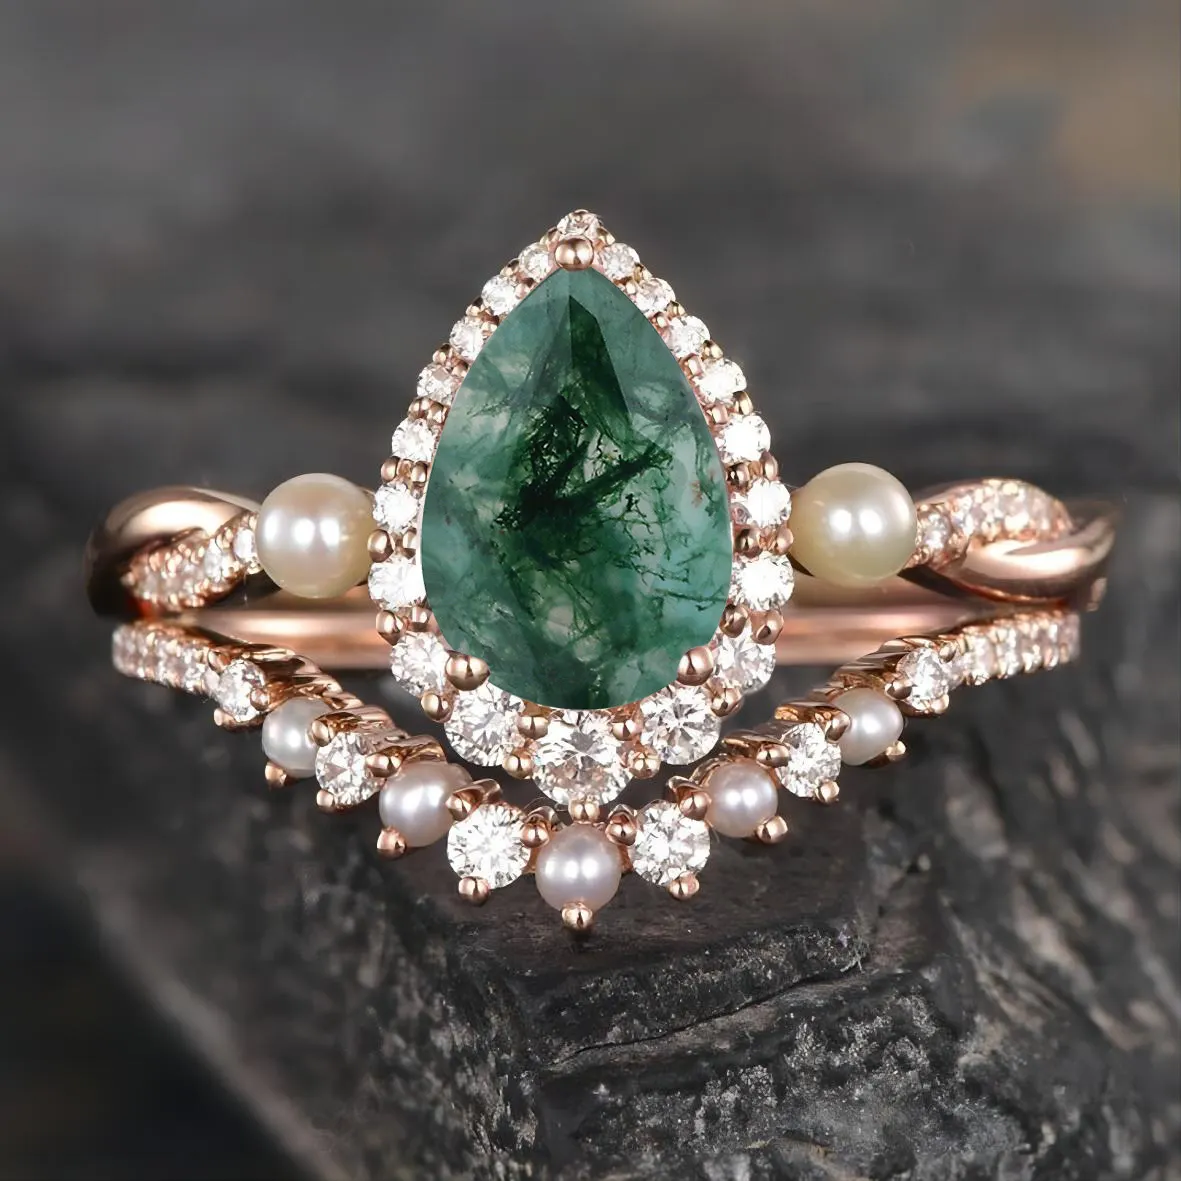 Set Batu Akik Lumut Daun Inspirasi Alami Cluster Emerald Aquatic Agate Wanita Batu Hijau Unik Pir Cincin Pernikahan Set